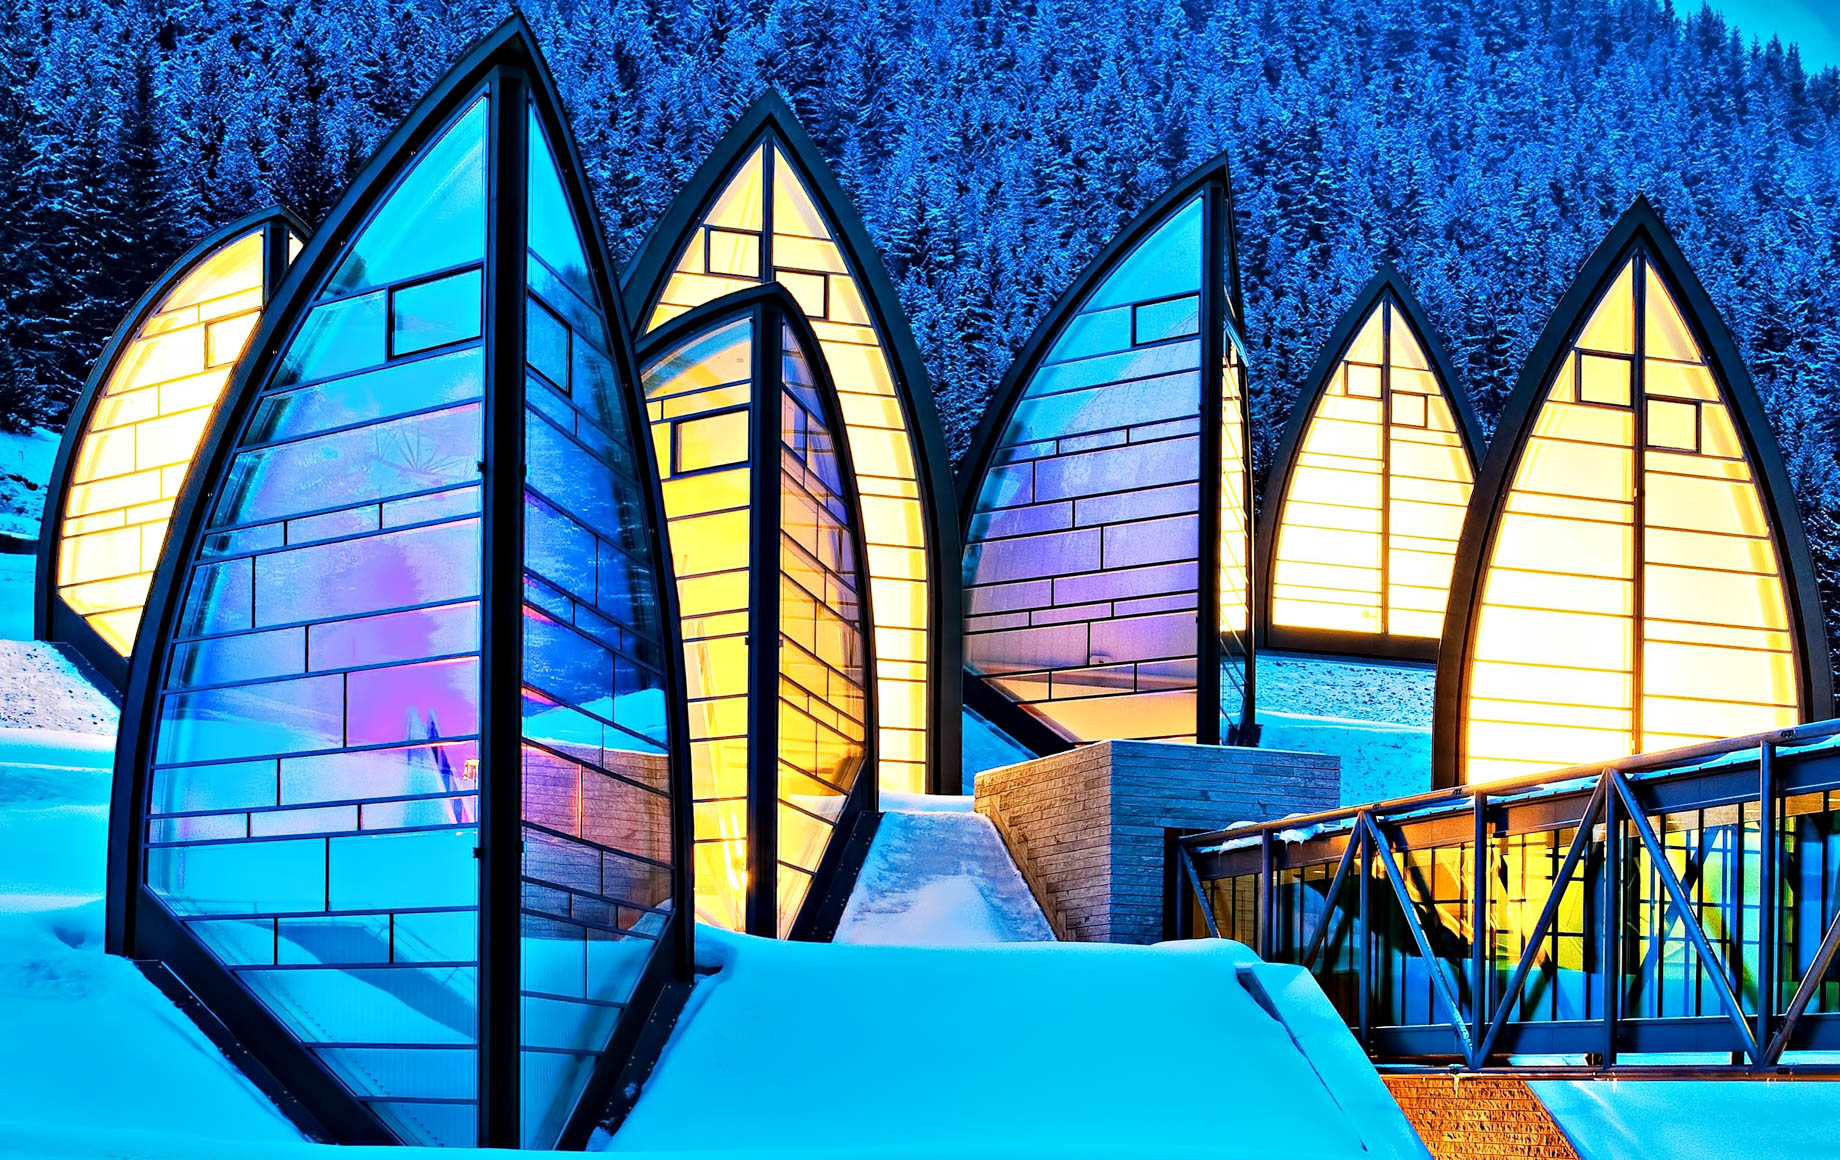 Tschuggen Grand Luxury Hotel – Arosa, Switzerland